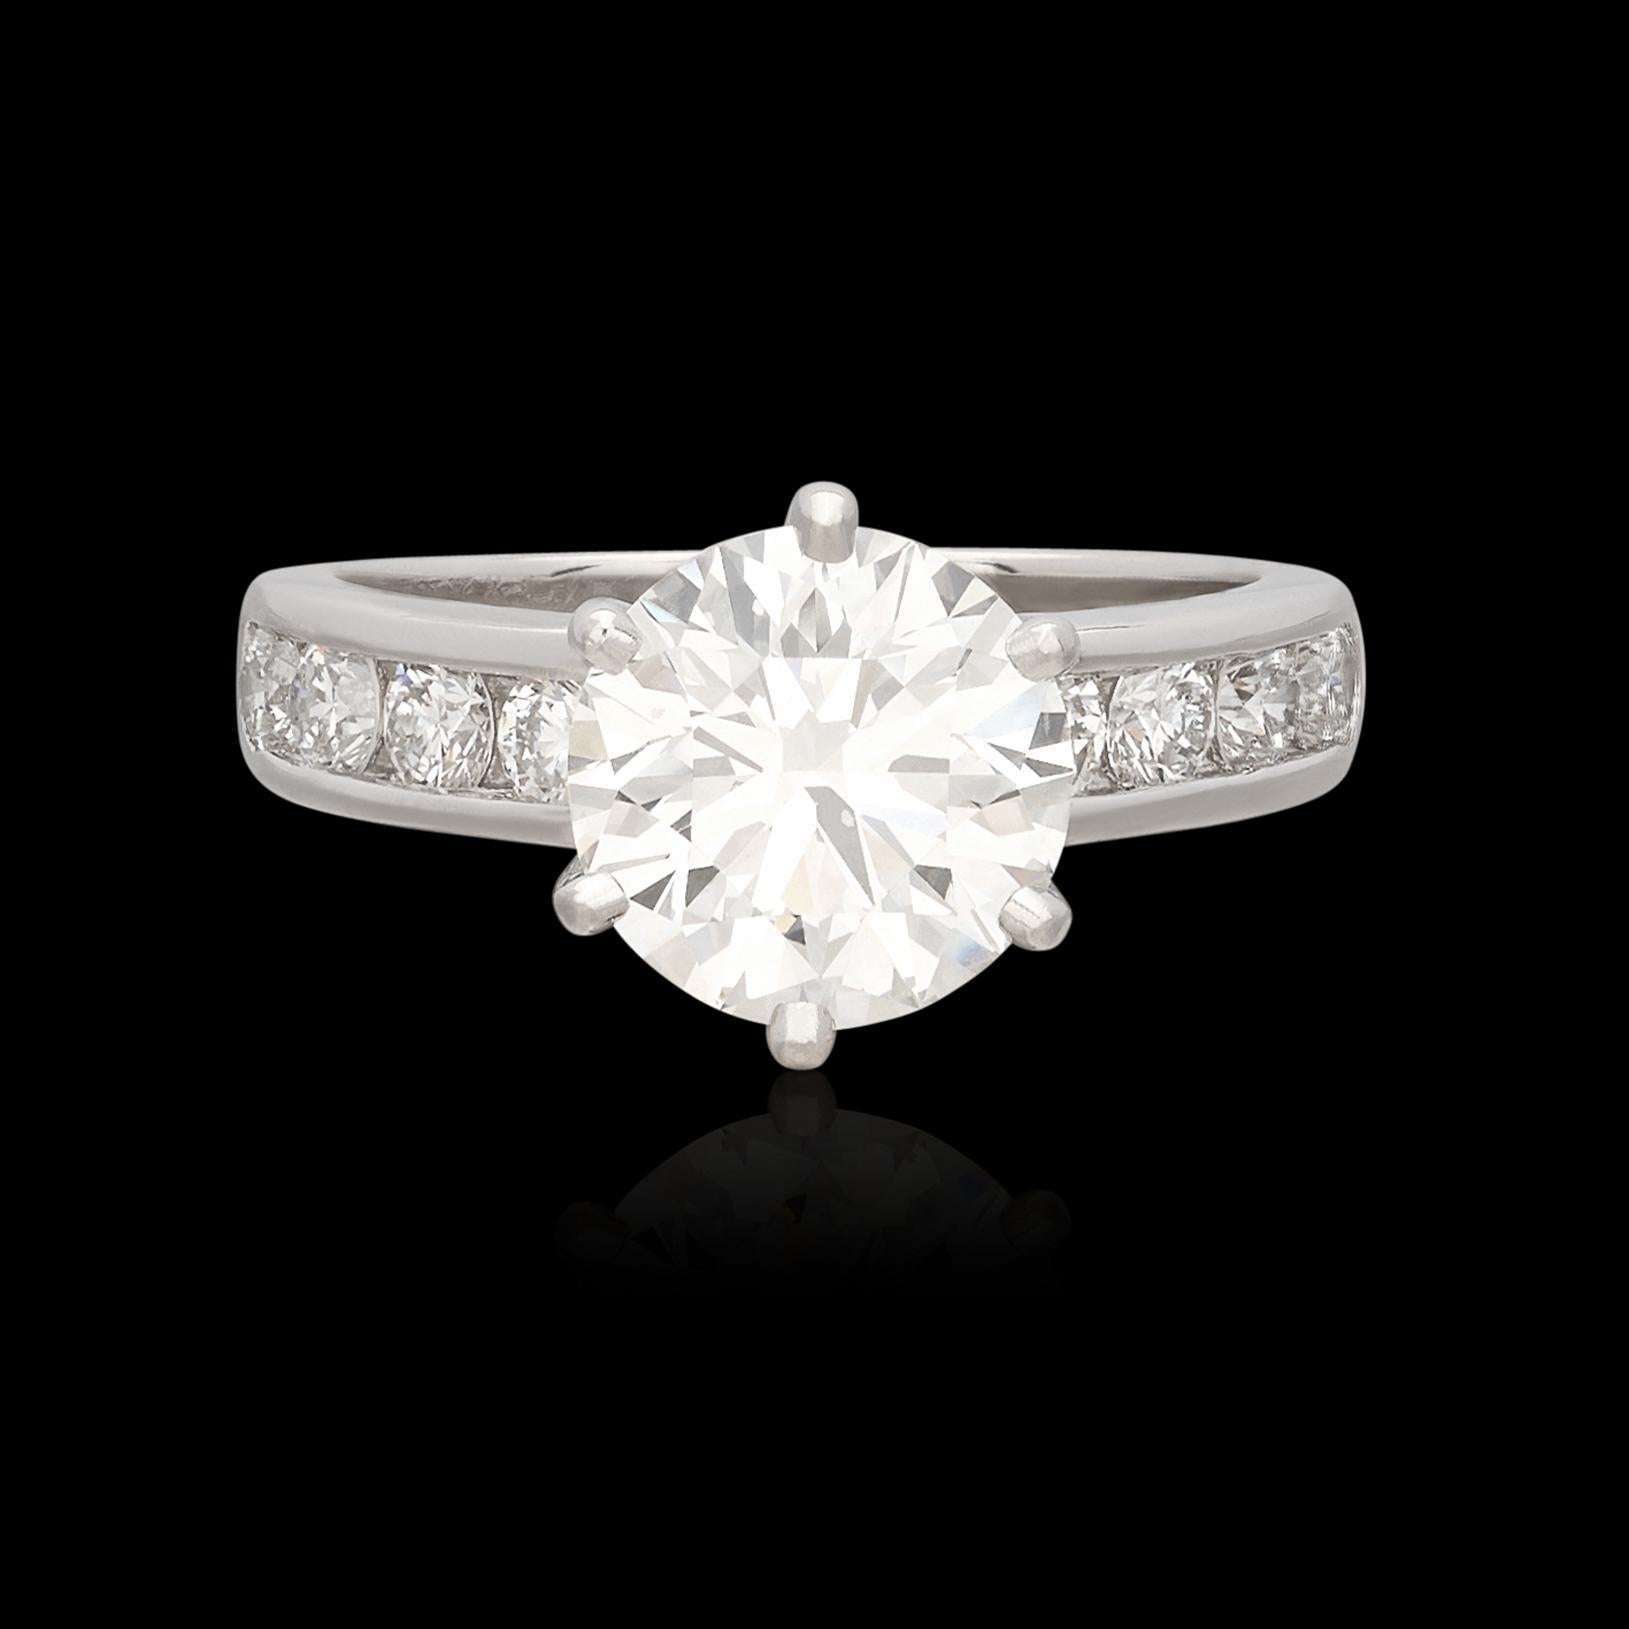 Round Cut 3.01 carat Diamond Platinum Ring by Tiffany & Co.